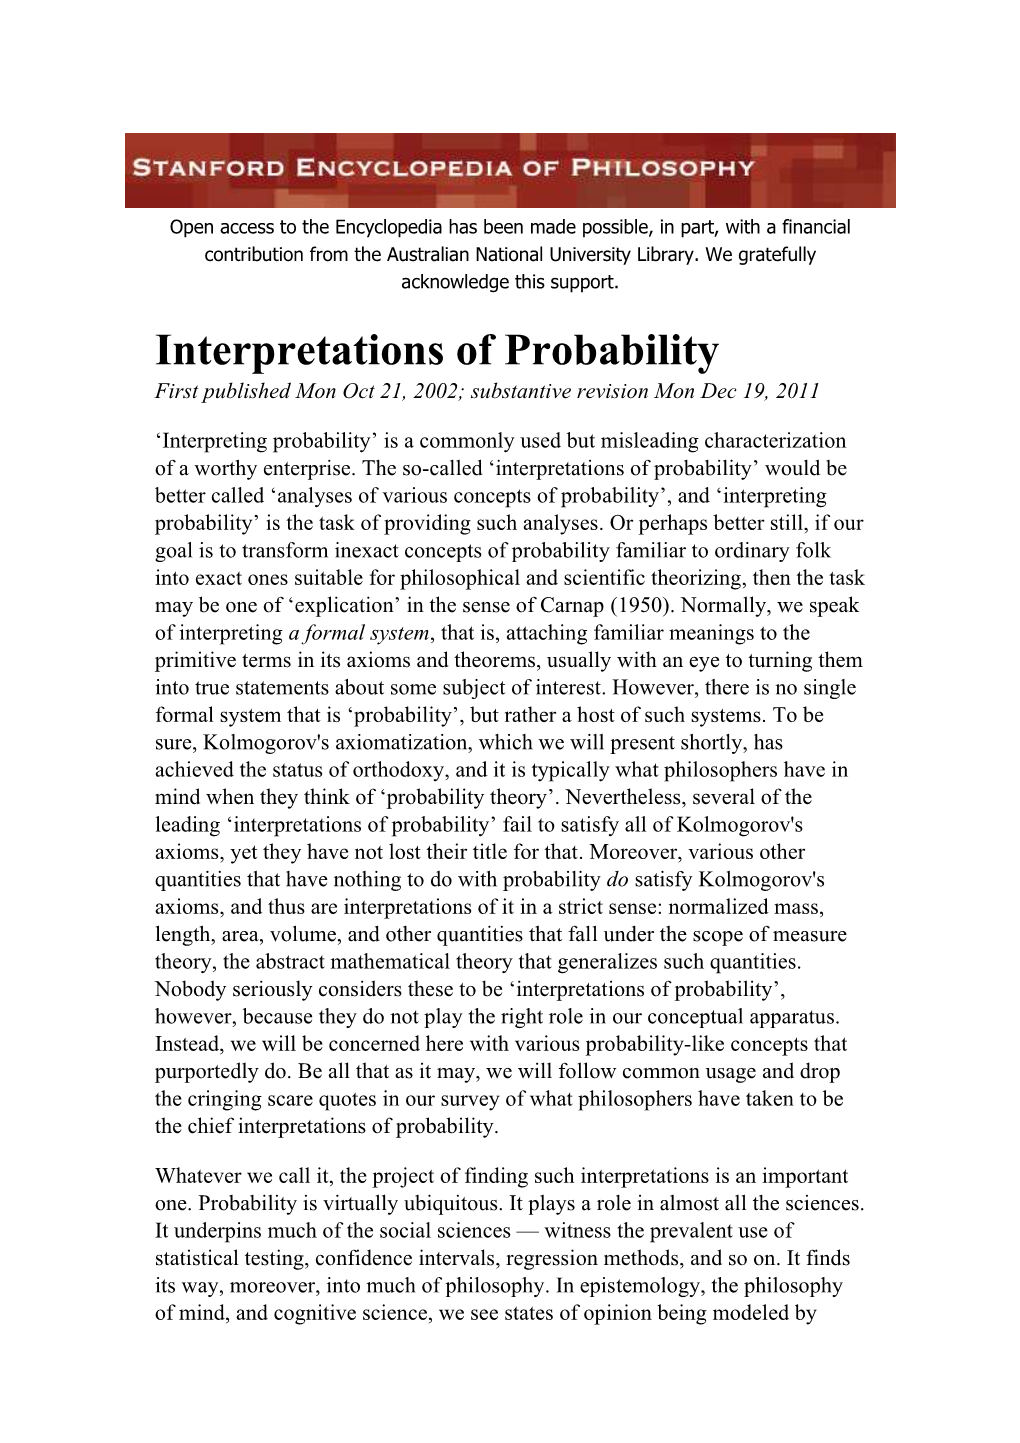 Interpretations of Probability First Published Mon Oct 21, 2002; Substantive Revision Mon Dec 19, 2011